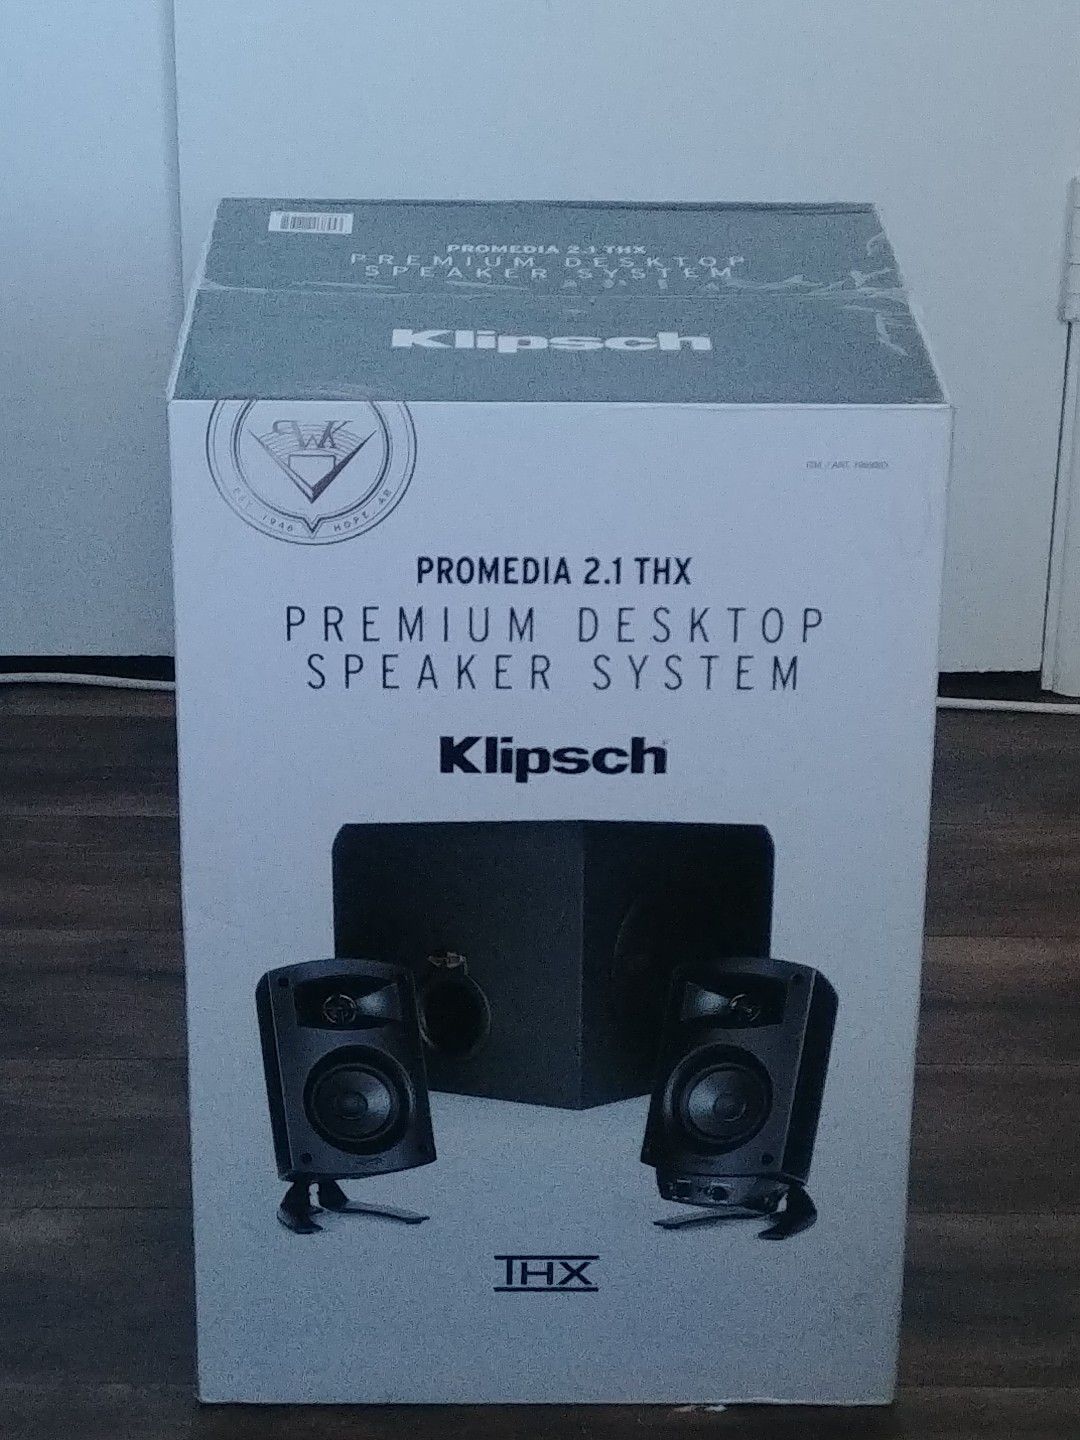 Brand new (unopened) Klipsch promedia 2.1 THX. Desktop speaker system